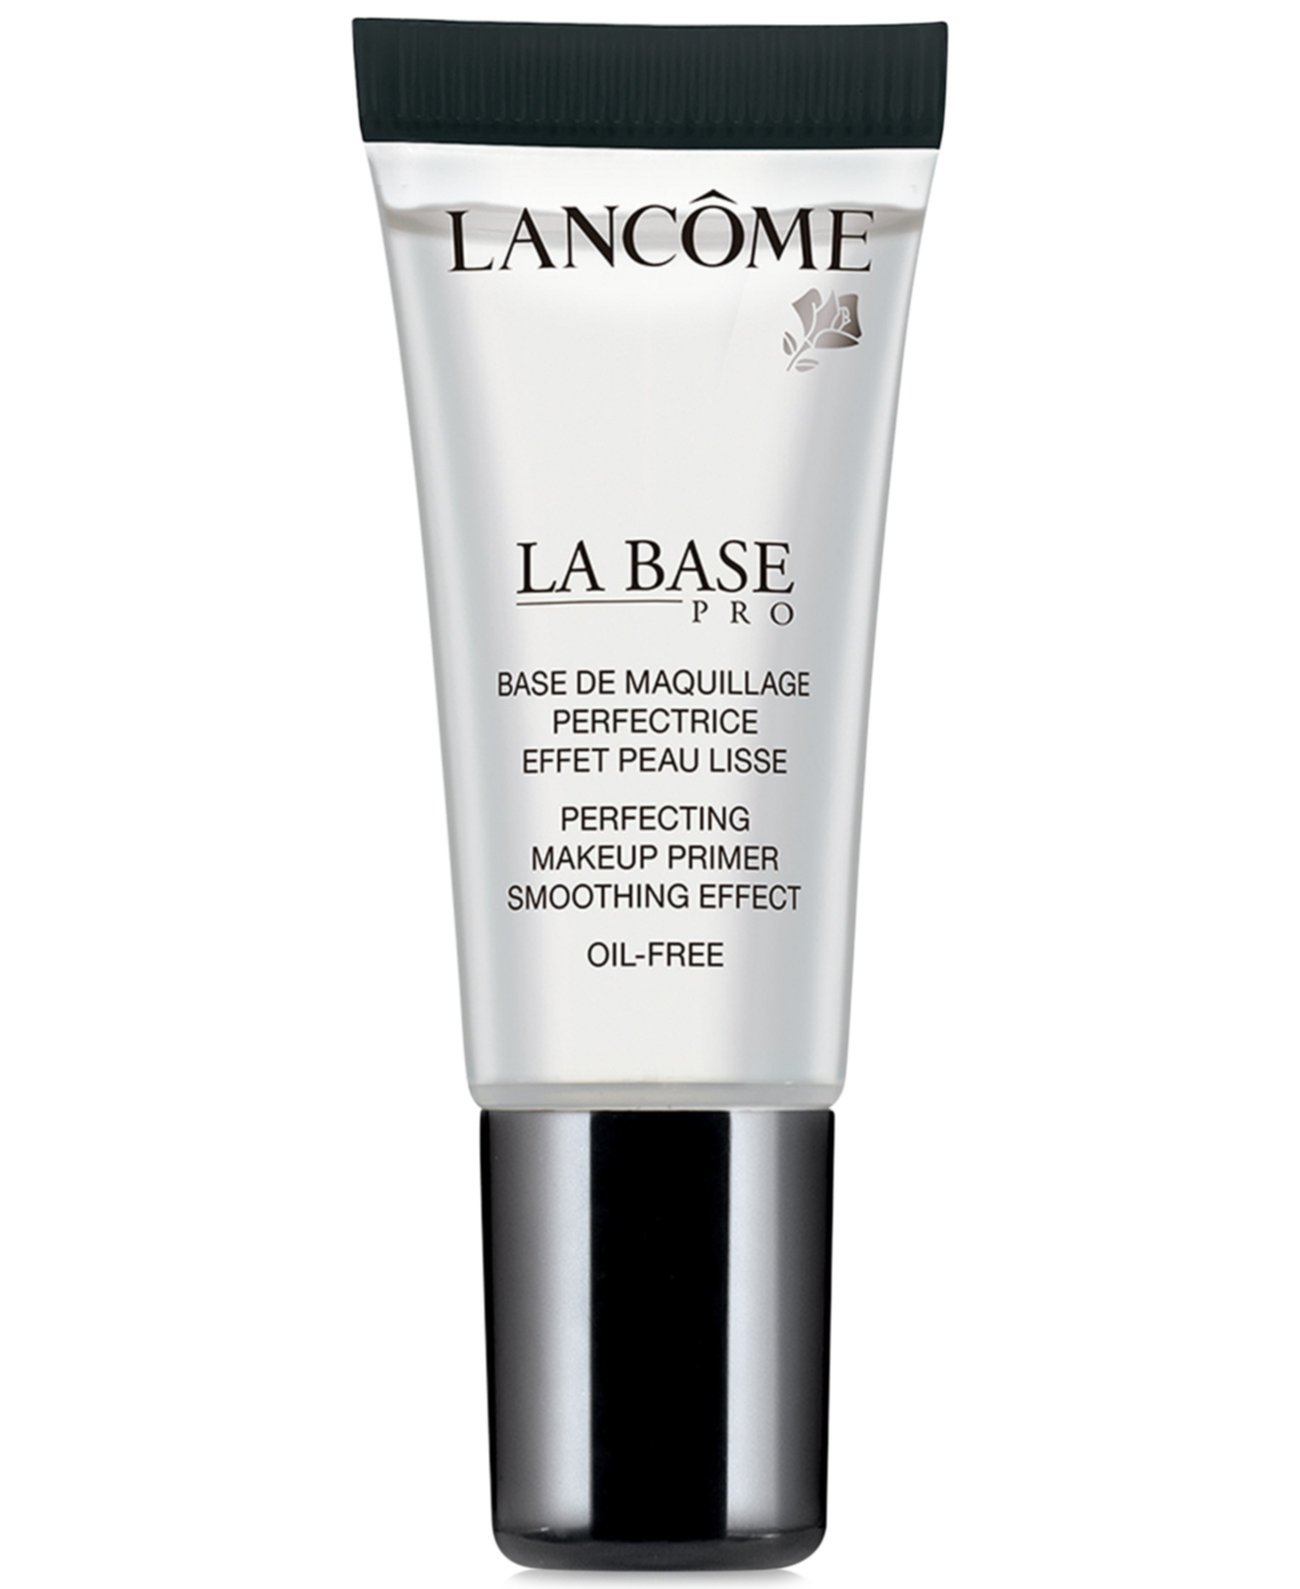 La Base Pro Совершенствующийся размер грунтовки для макияжа, 0,5 унции. Lancome